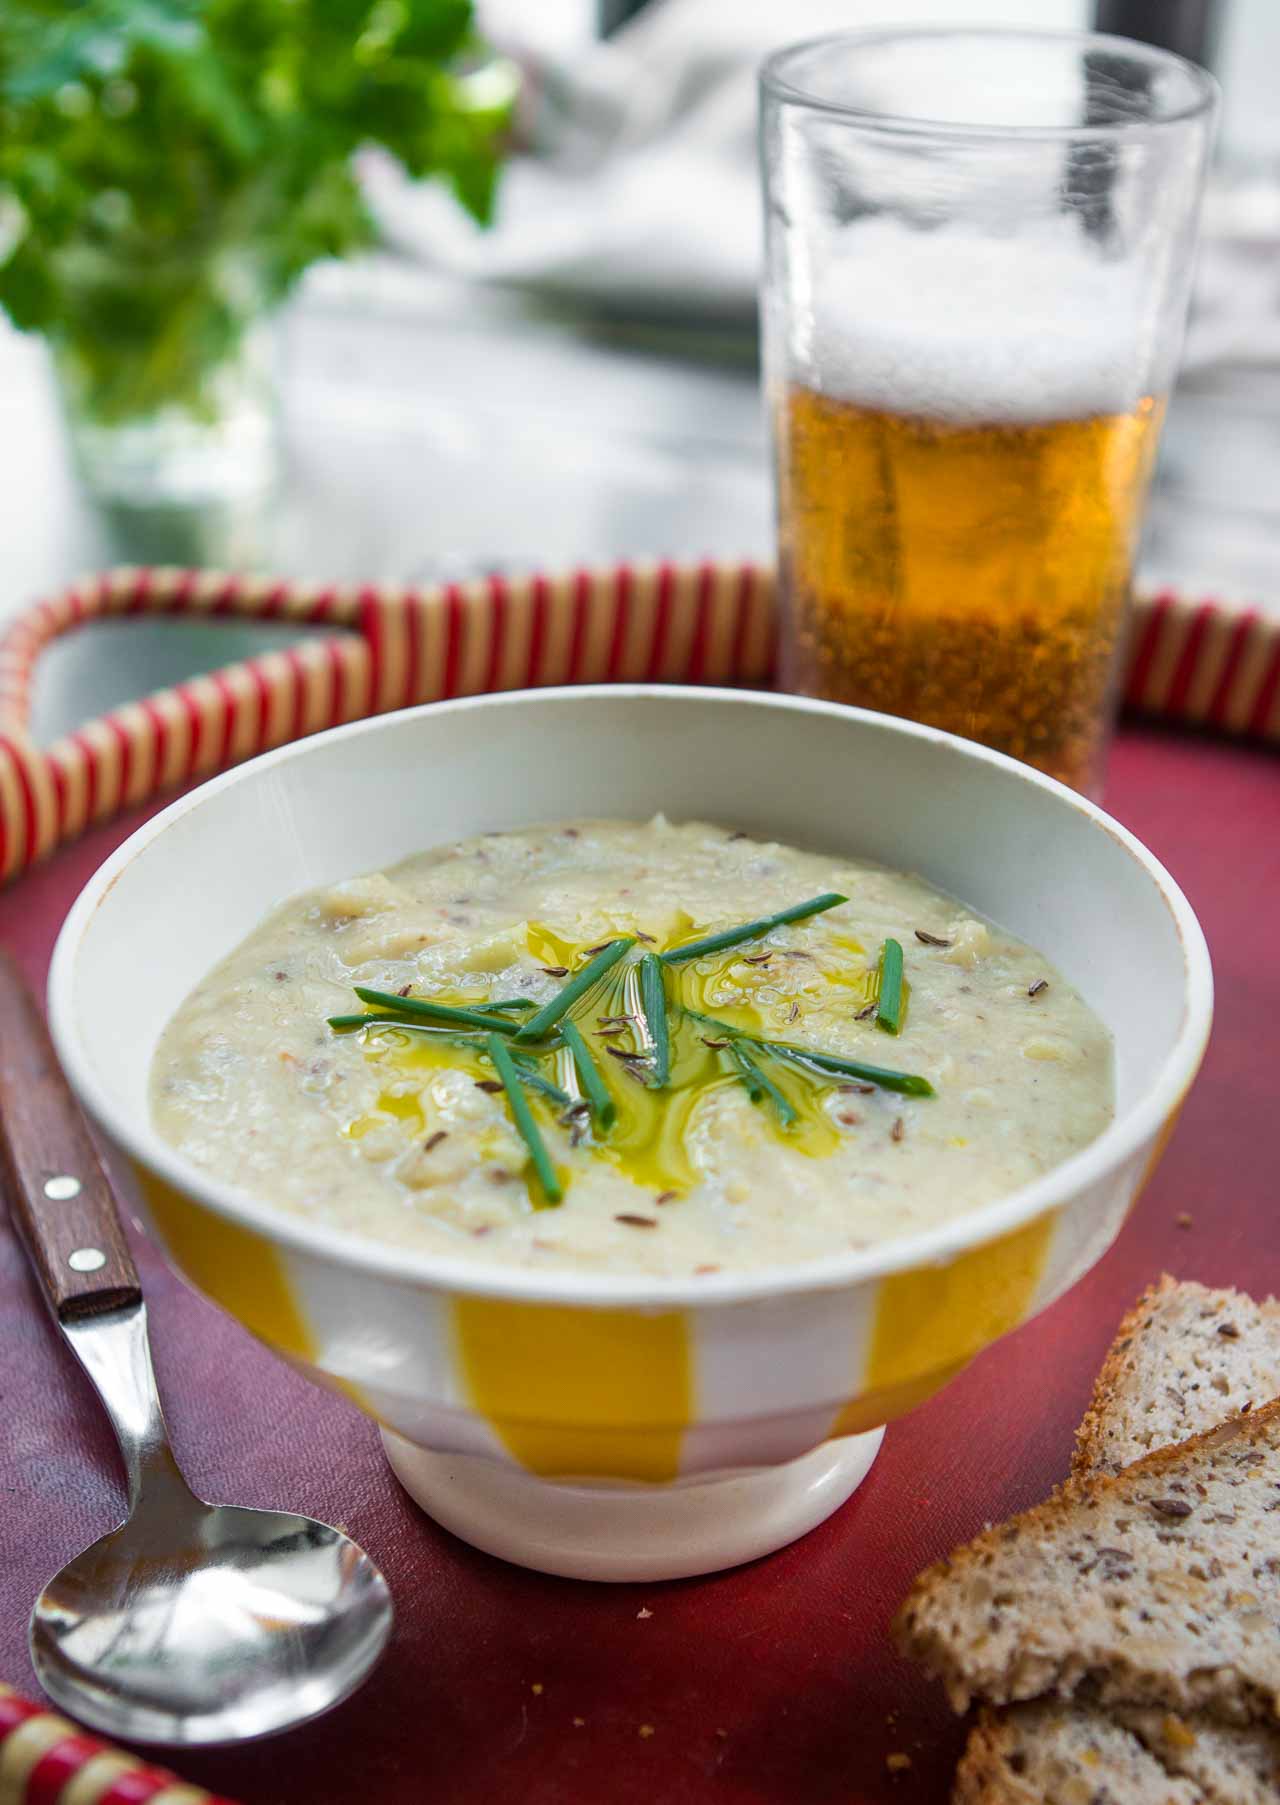 https://www.davidlebovitz.com/wp-content/uploads/2020/03/Cream-of-cabbage-soup-recipe-9.jpg